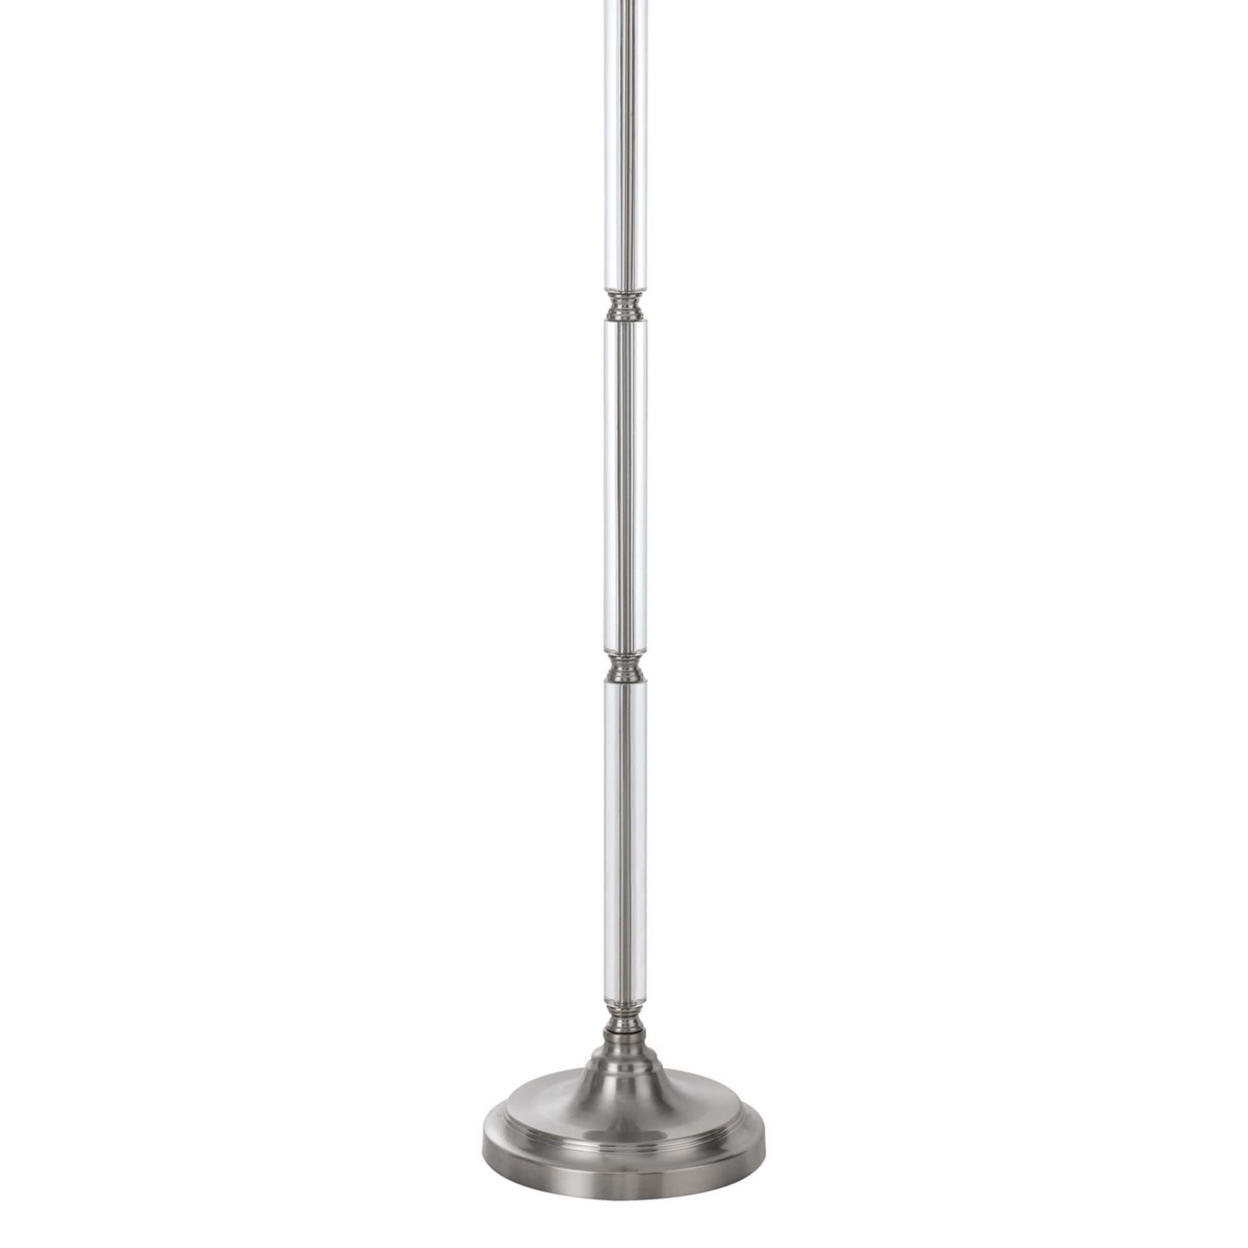 Floor Lamp With Tubular Metal And Crystal Base, White And Silver- Saltoro Sherpi